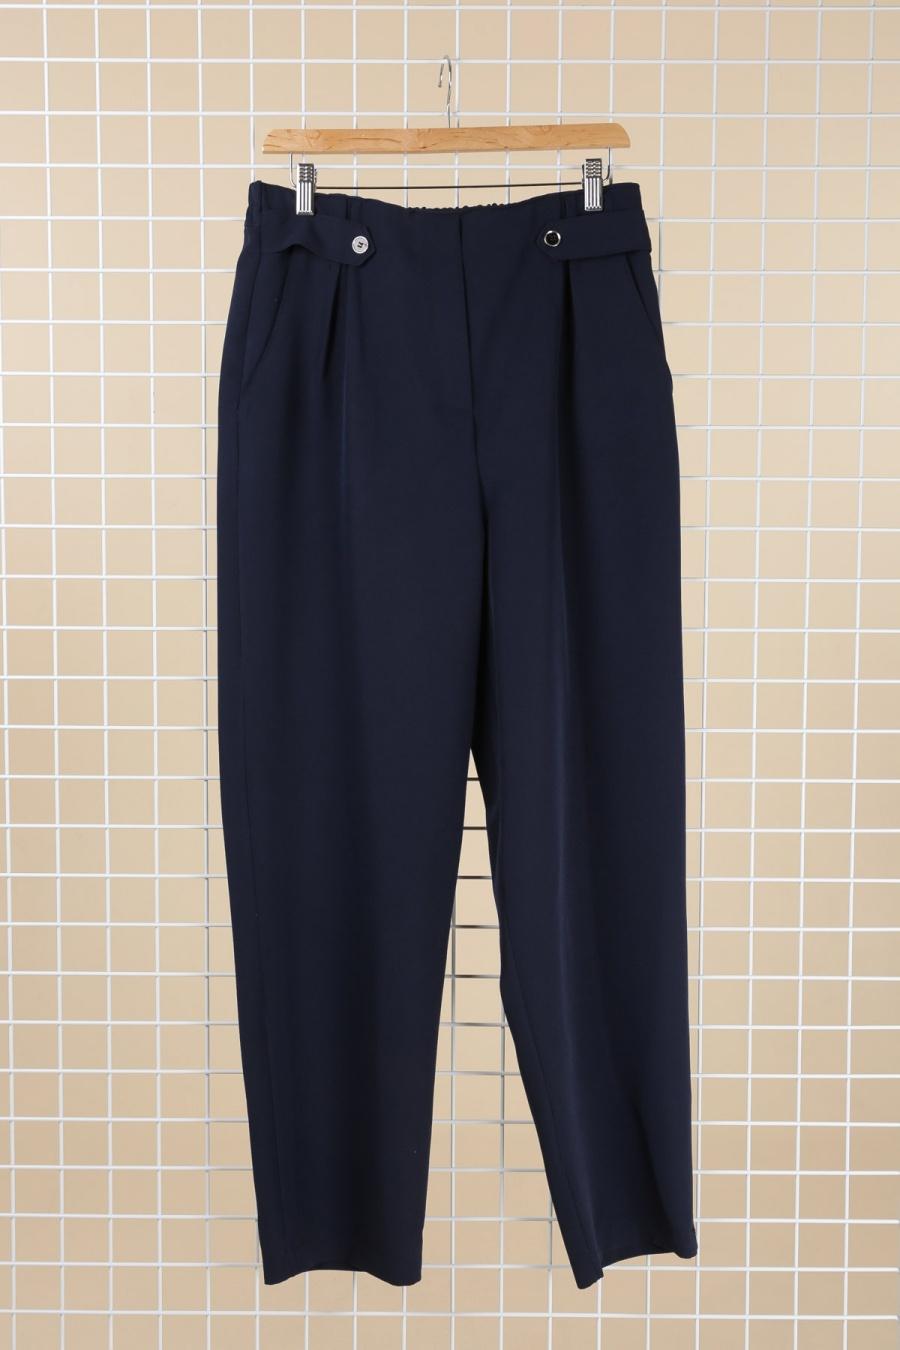 Pantaloni Donna Navy blue VETI STYLE 3666 #c Efashion Paris